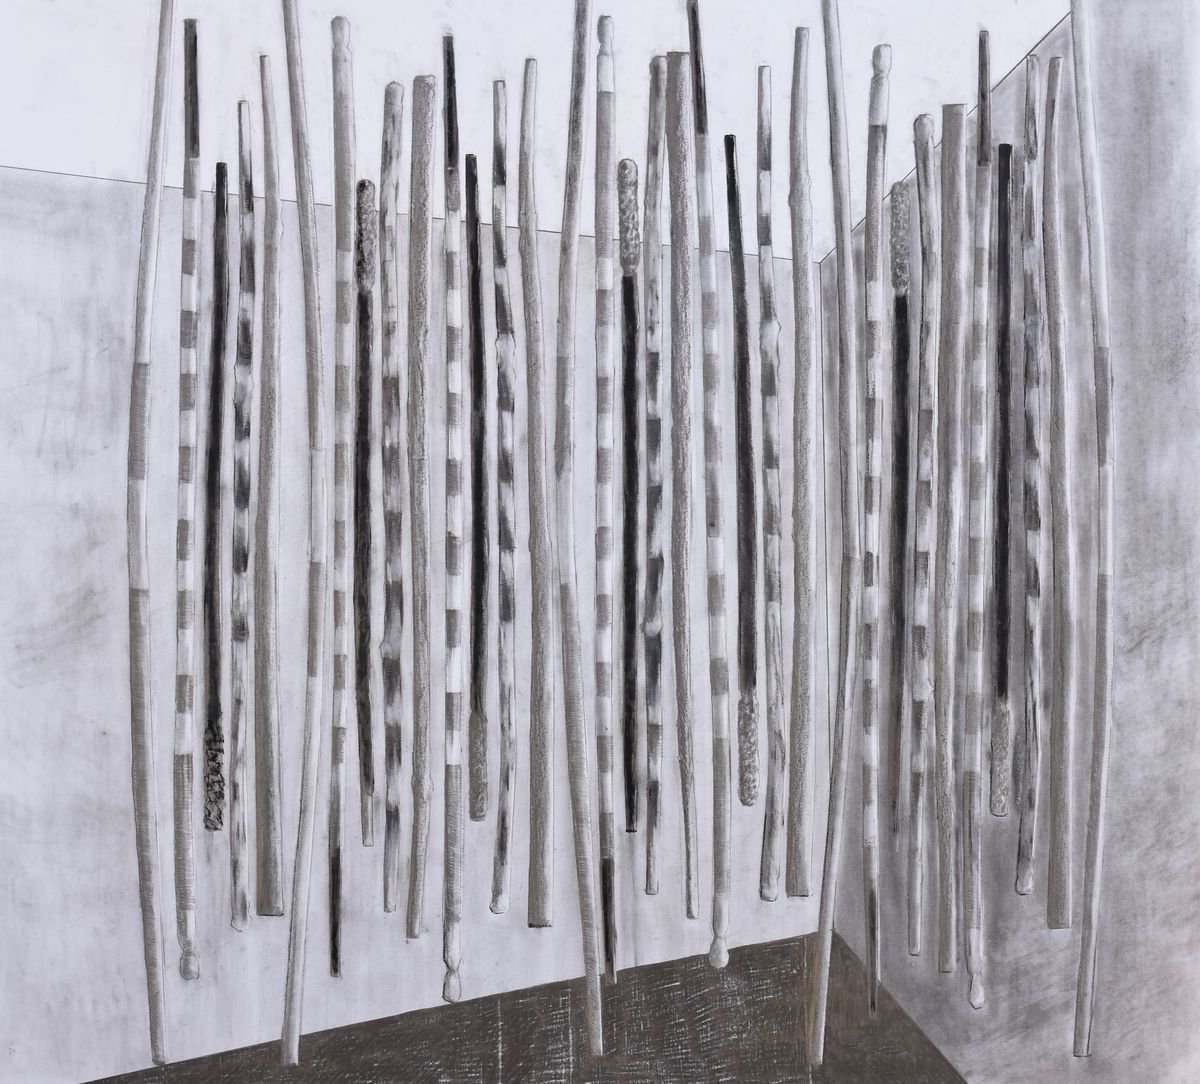 Walking sticks by Nicholas Everitt